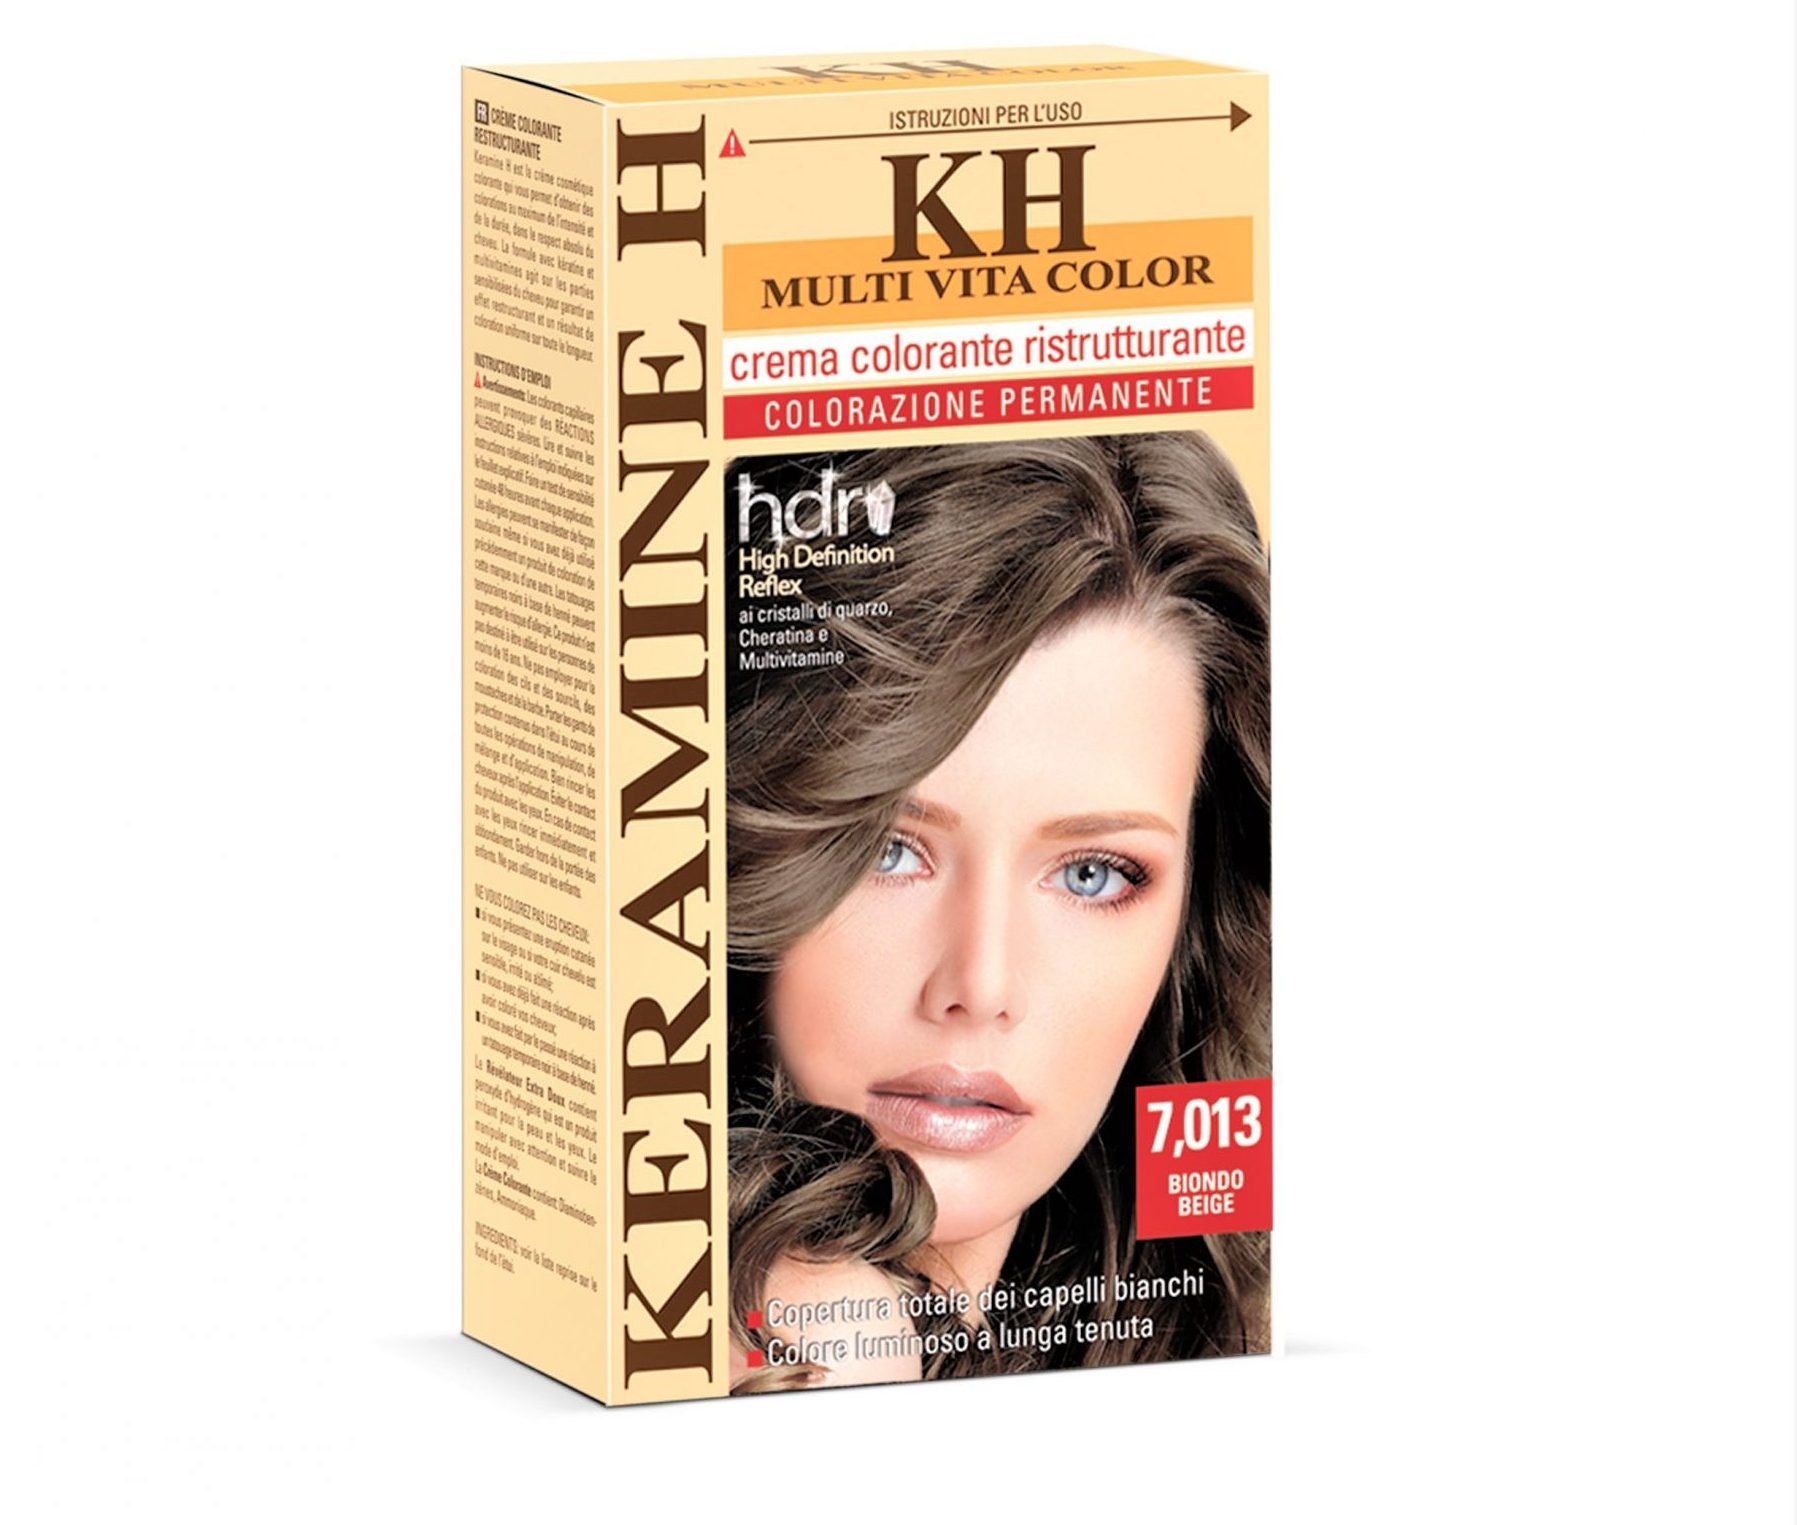 Keramine H: tendenza blond beige hair, il biondo che fonde riflessi dorati e freddi